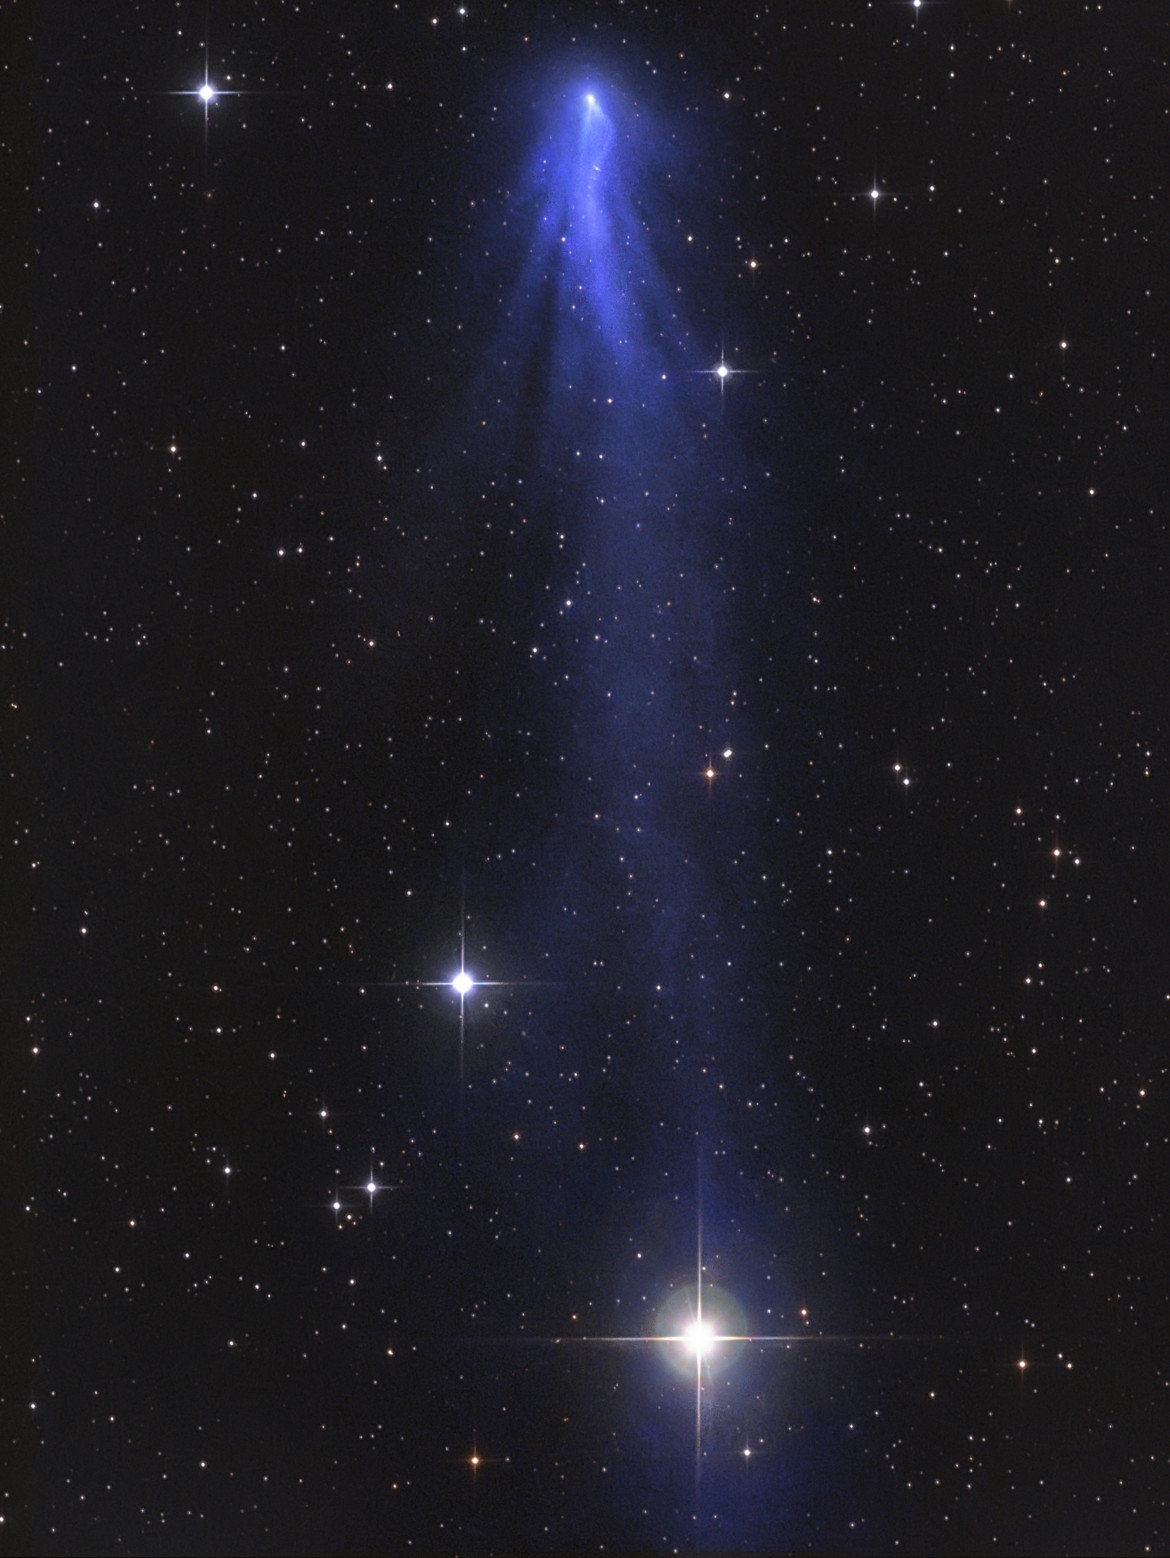 fot. Gerald Rhemann, "Comet C/2016 R2 Panstarrs the blue carbon monoxide comet", 3. miejsce w kategorii Planets, Comets and Asteroids / Insight Astronomy Photographer of the Year 2018